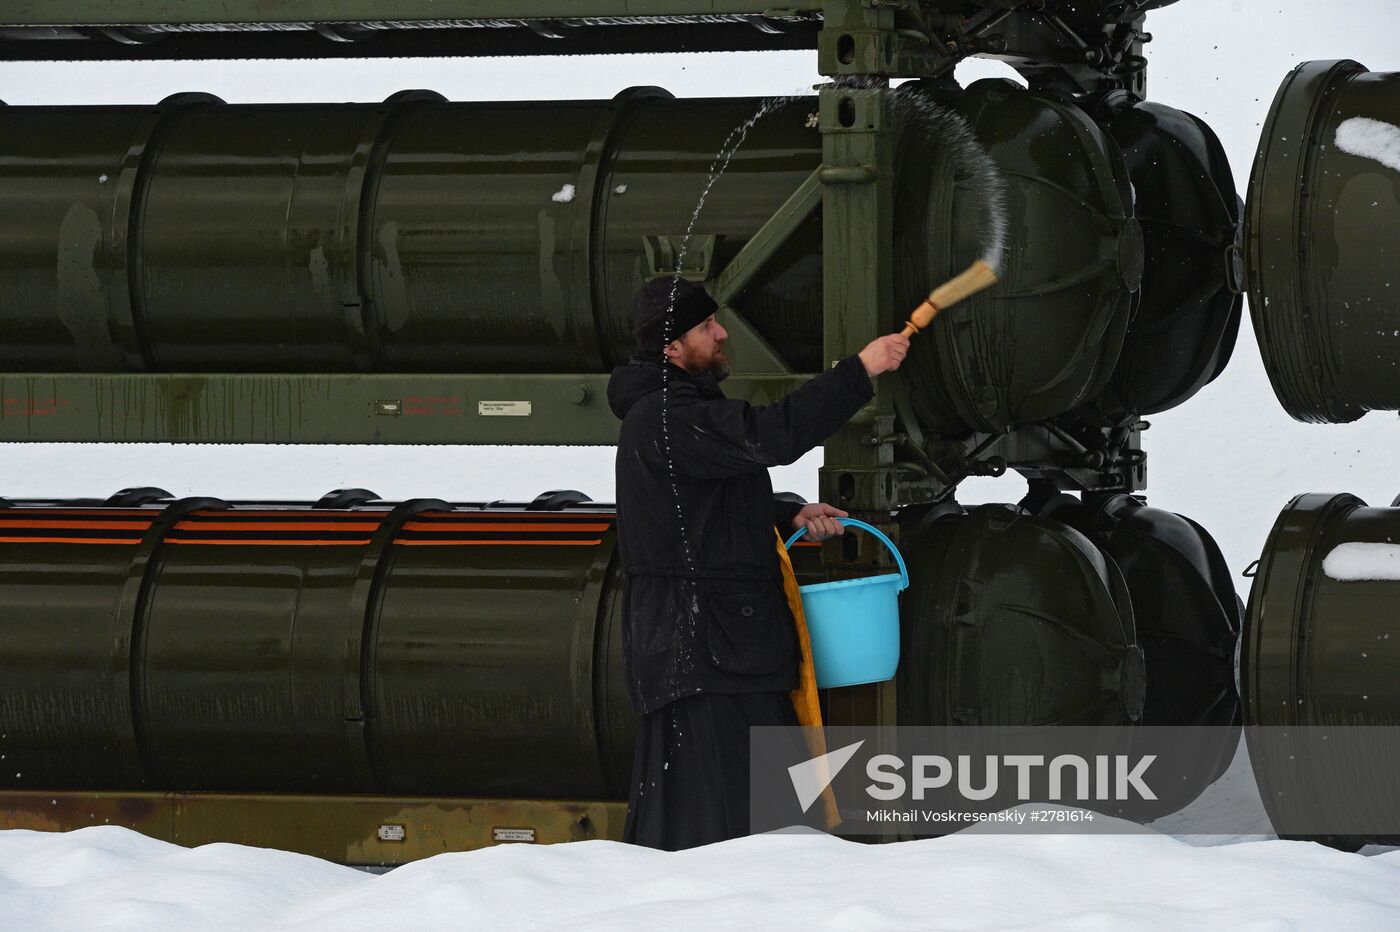 Regiment of SAM S-400 "Triumf" on alert in Moscow region